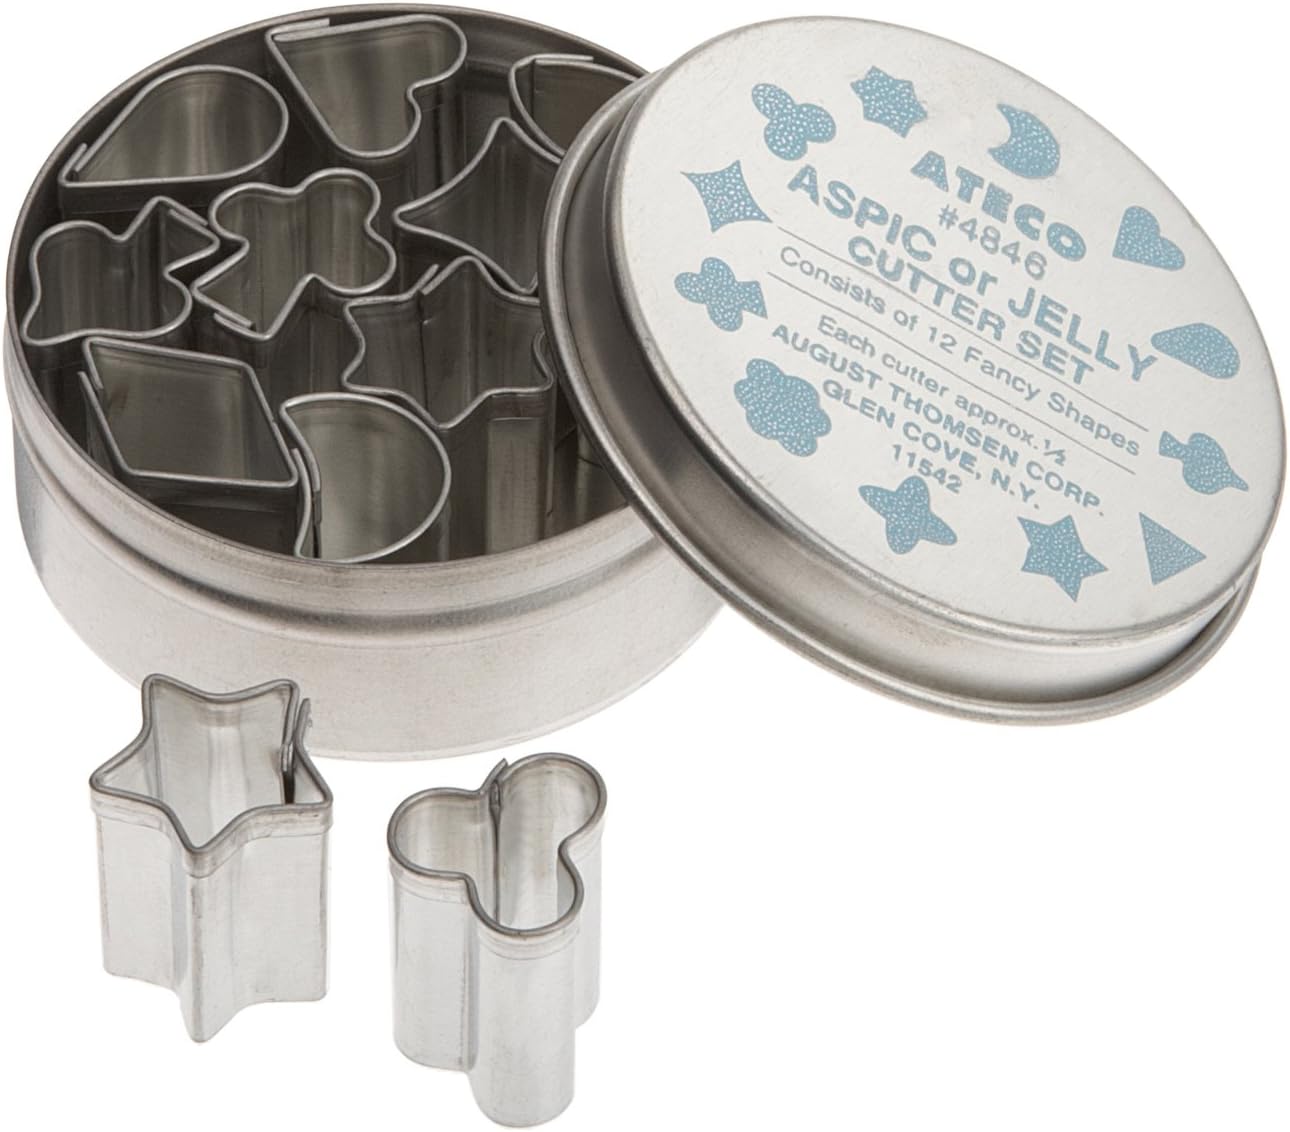 Aspic Assorted Shapes Mini Cutters, Ateco 12 Piece Set